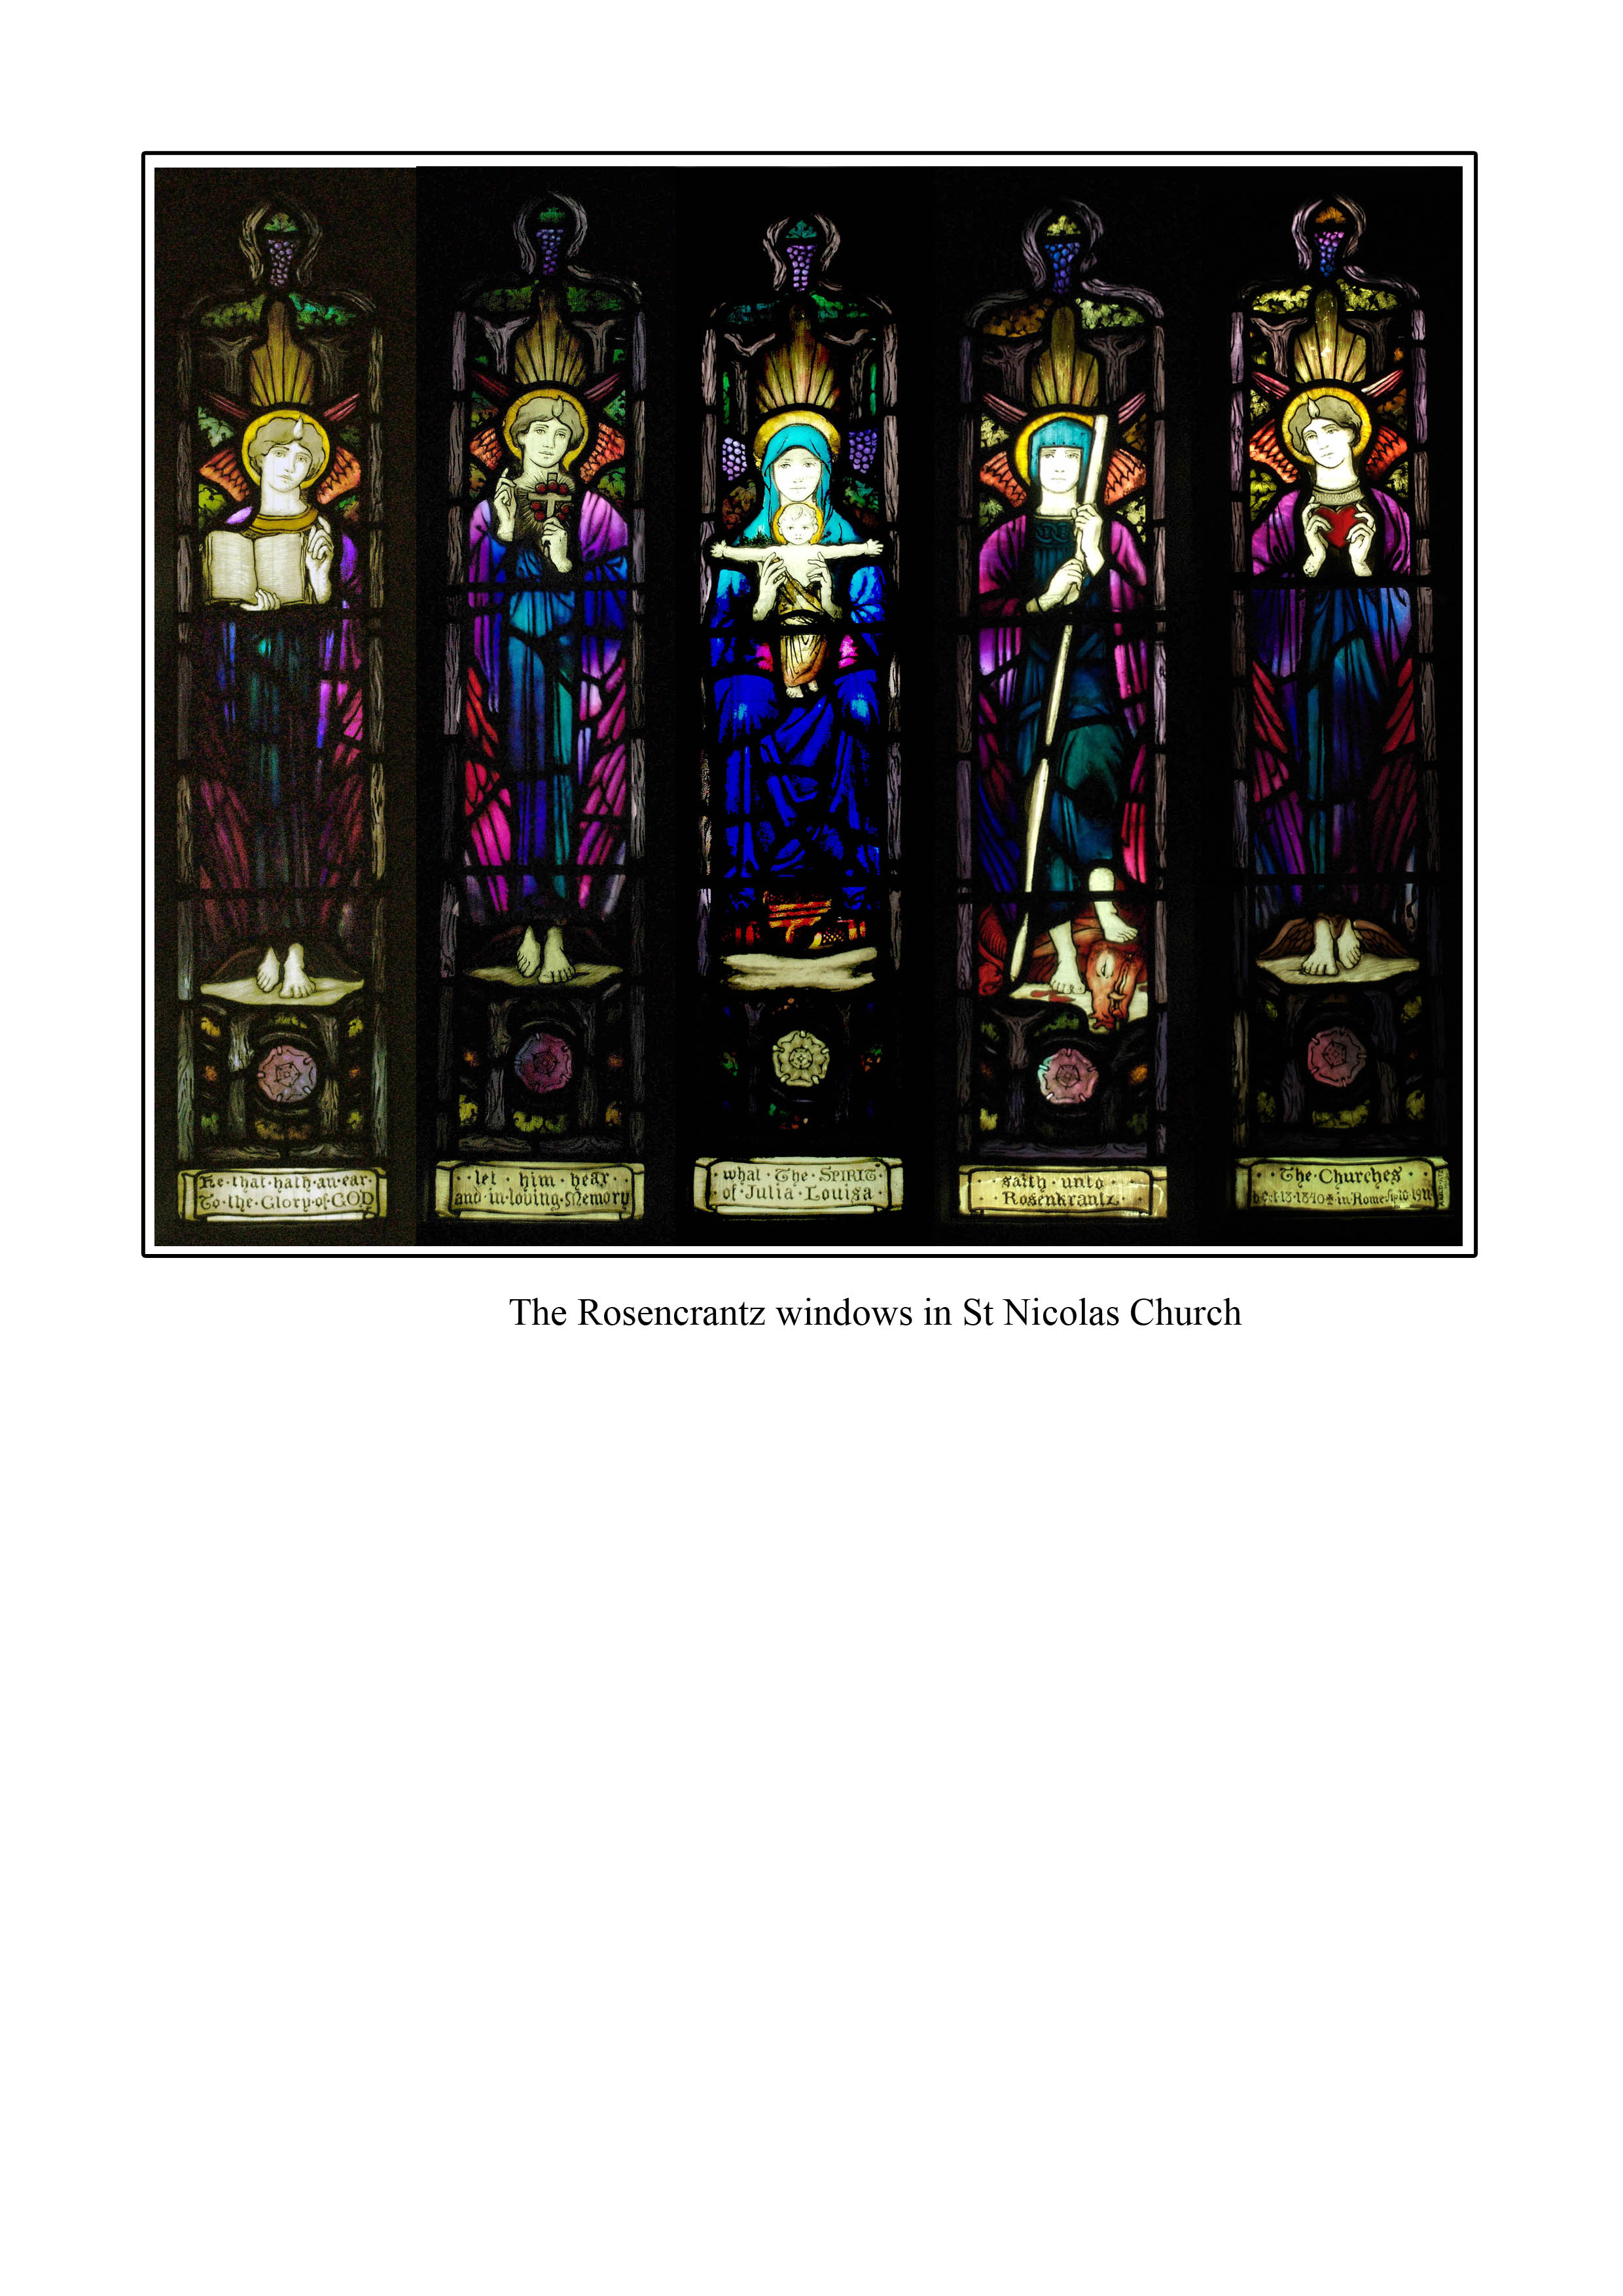 The Rosencrantz Window in St. Nicolas Church